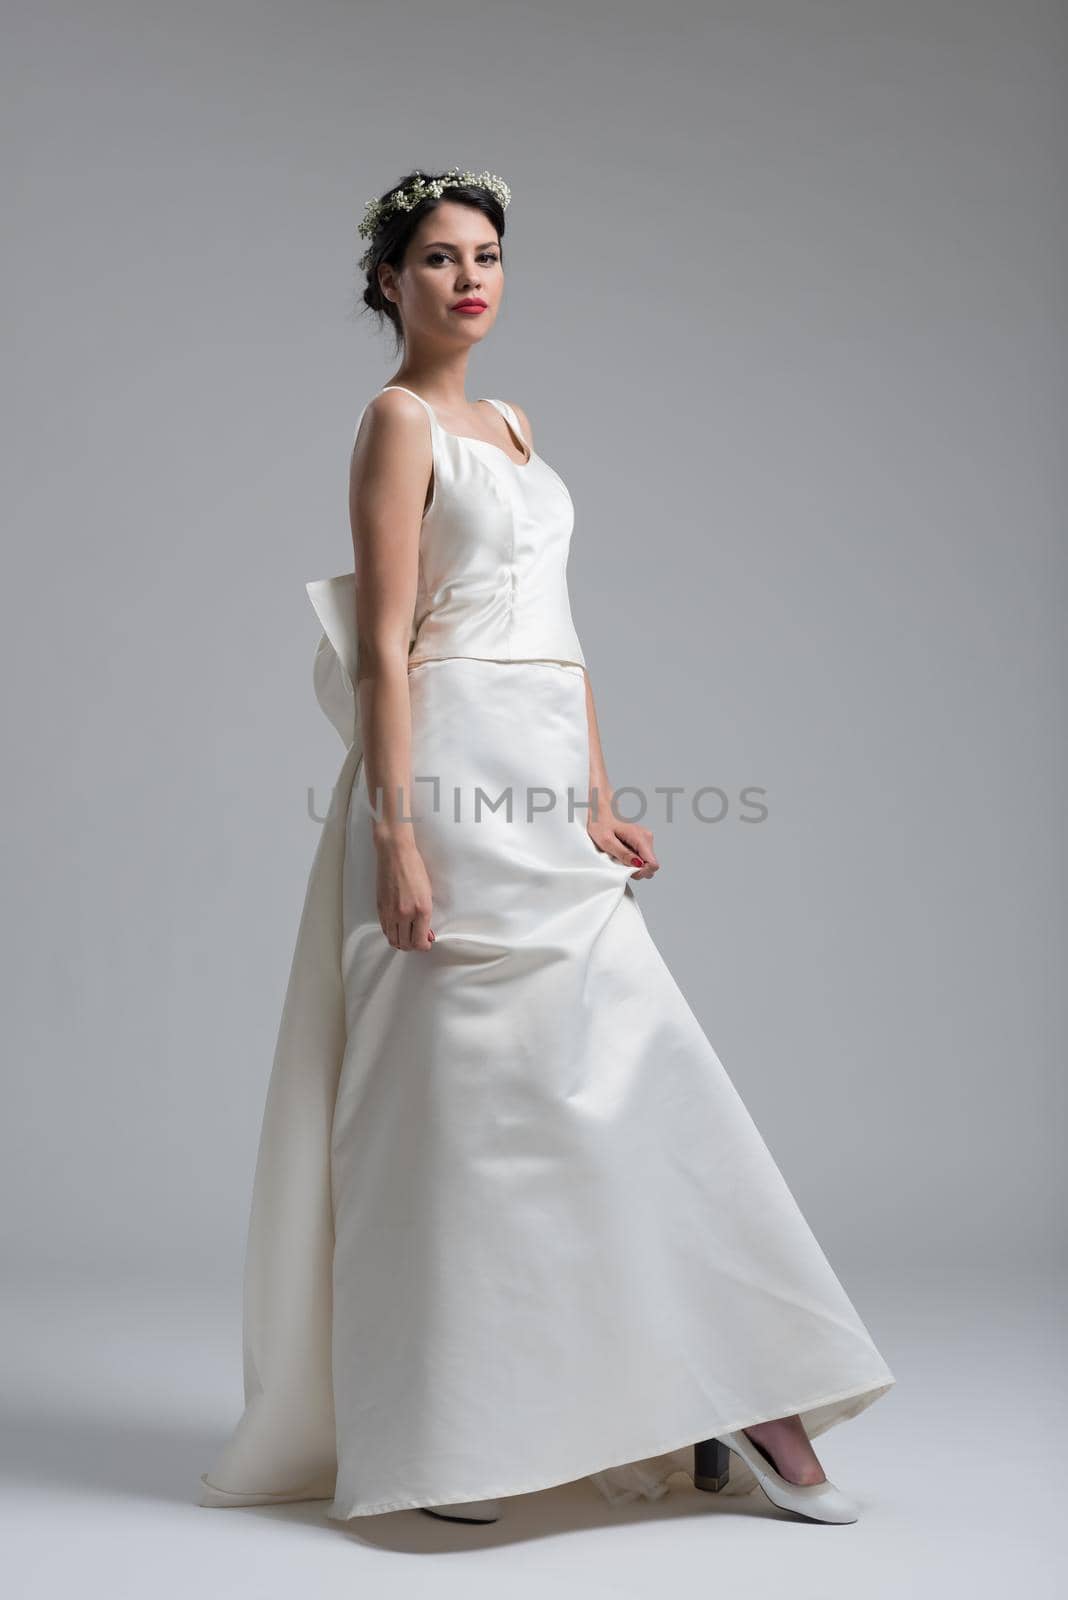 Portrait of beautiful young women in wedding dress by dotshock